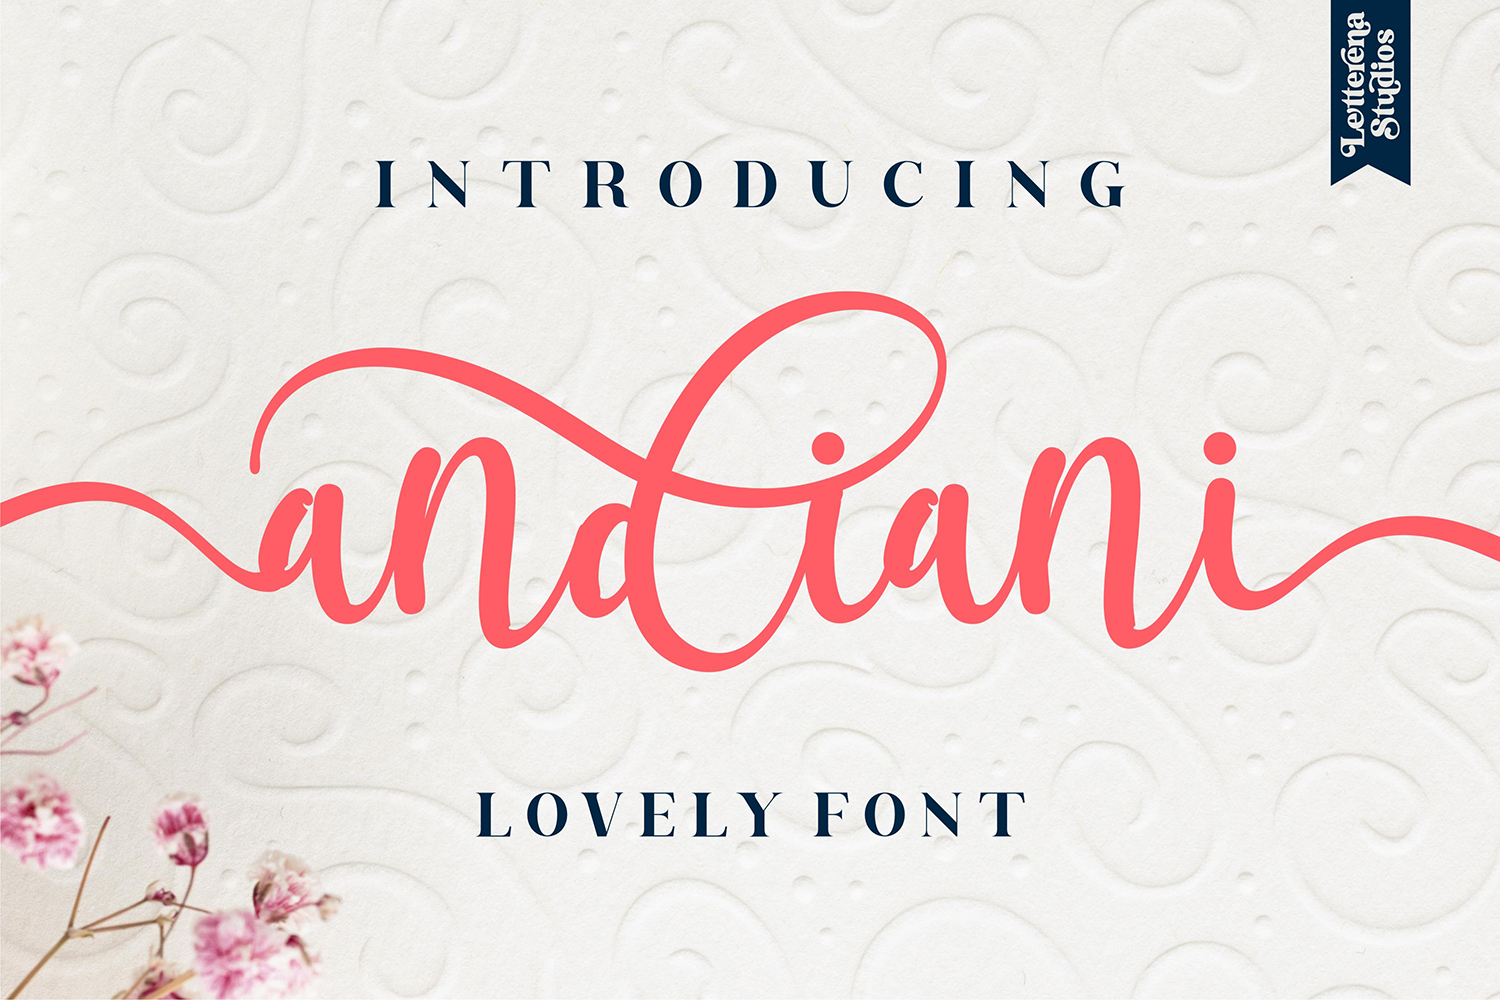 Andiani Free Font